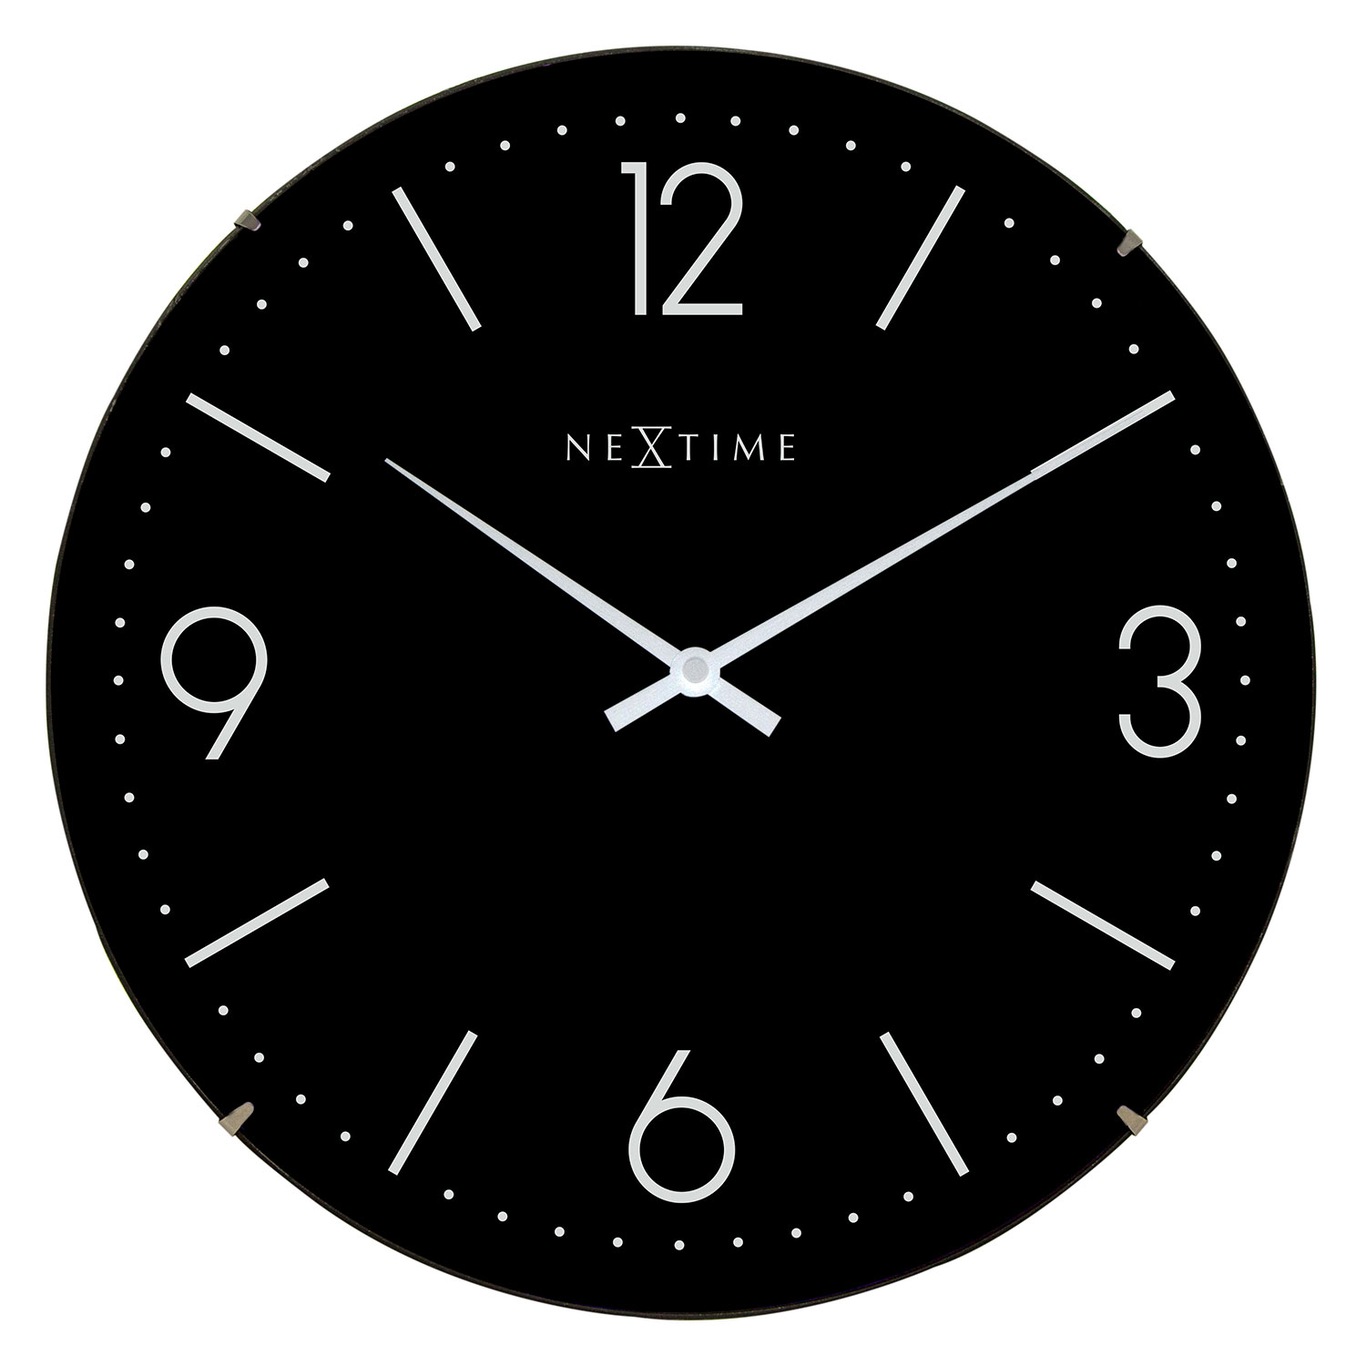 Basic Dome Wall Clock, Black